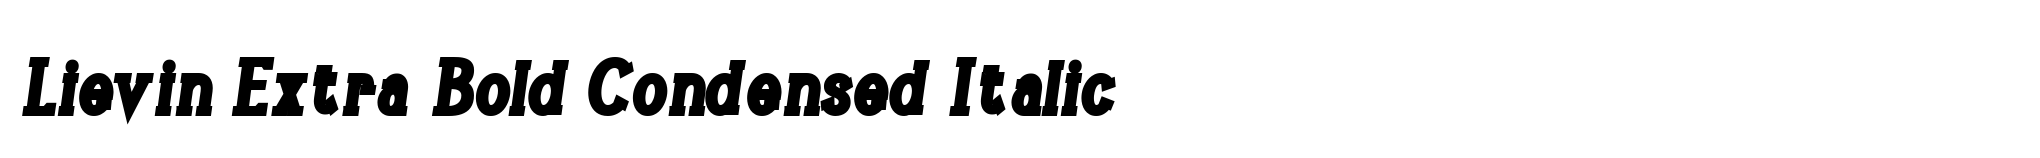 Lievin Extra Bold Condensed Italic image